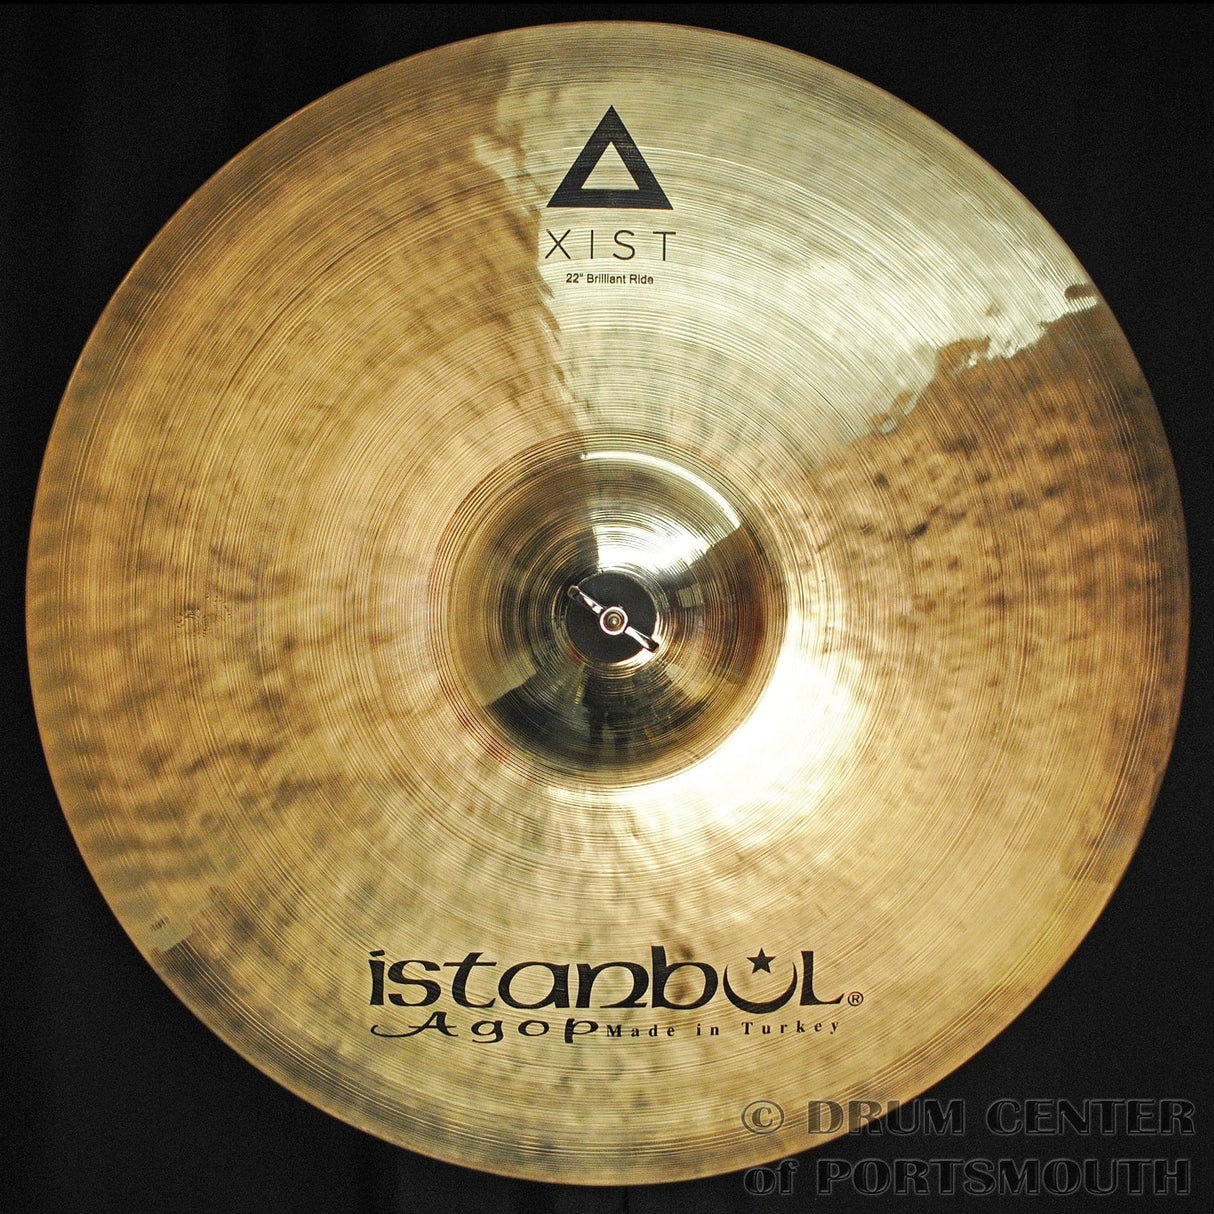 Istanbul Agop Xist Brilliant Ride Cymbal 22"